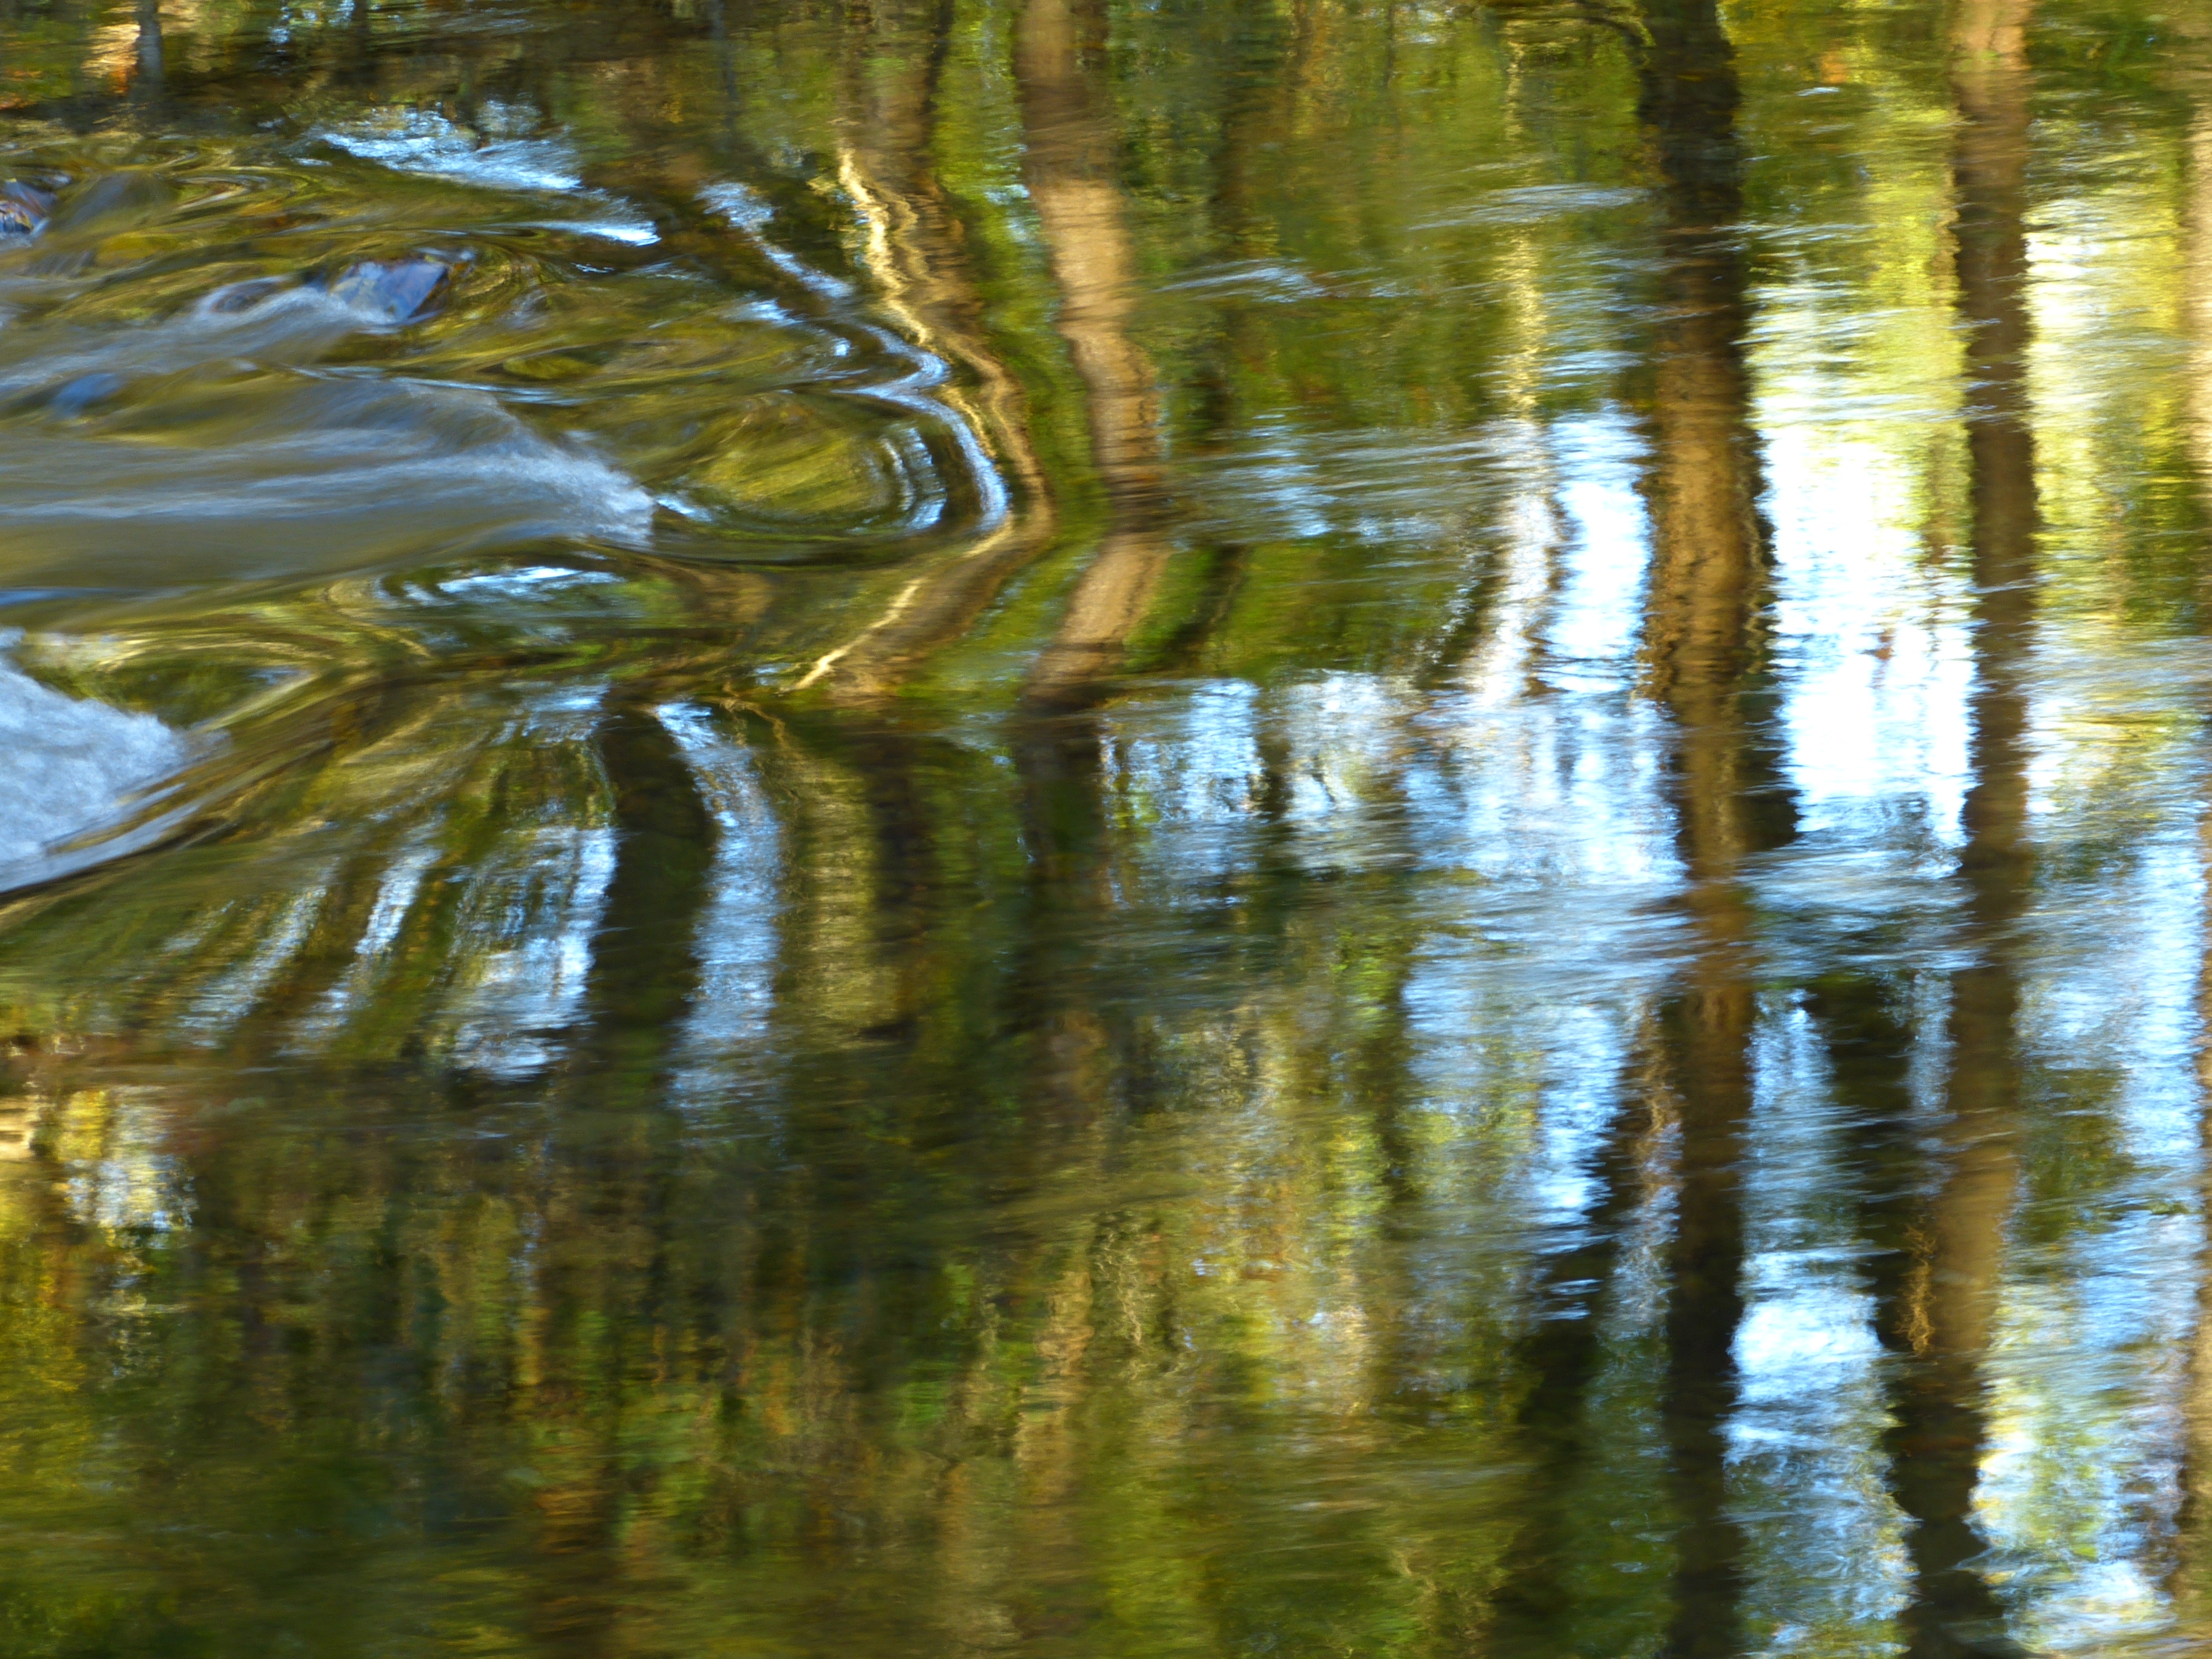 Reflection in Davidson River  -  Pisgah National Forest, North Carolina